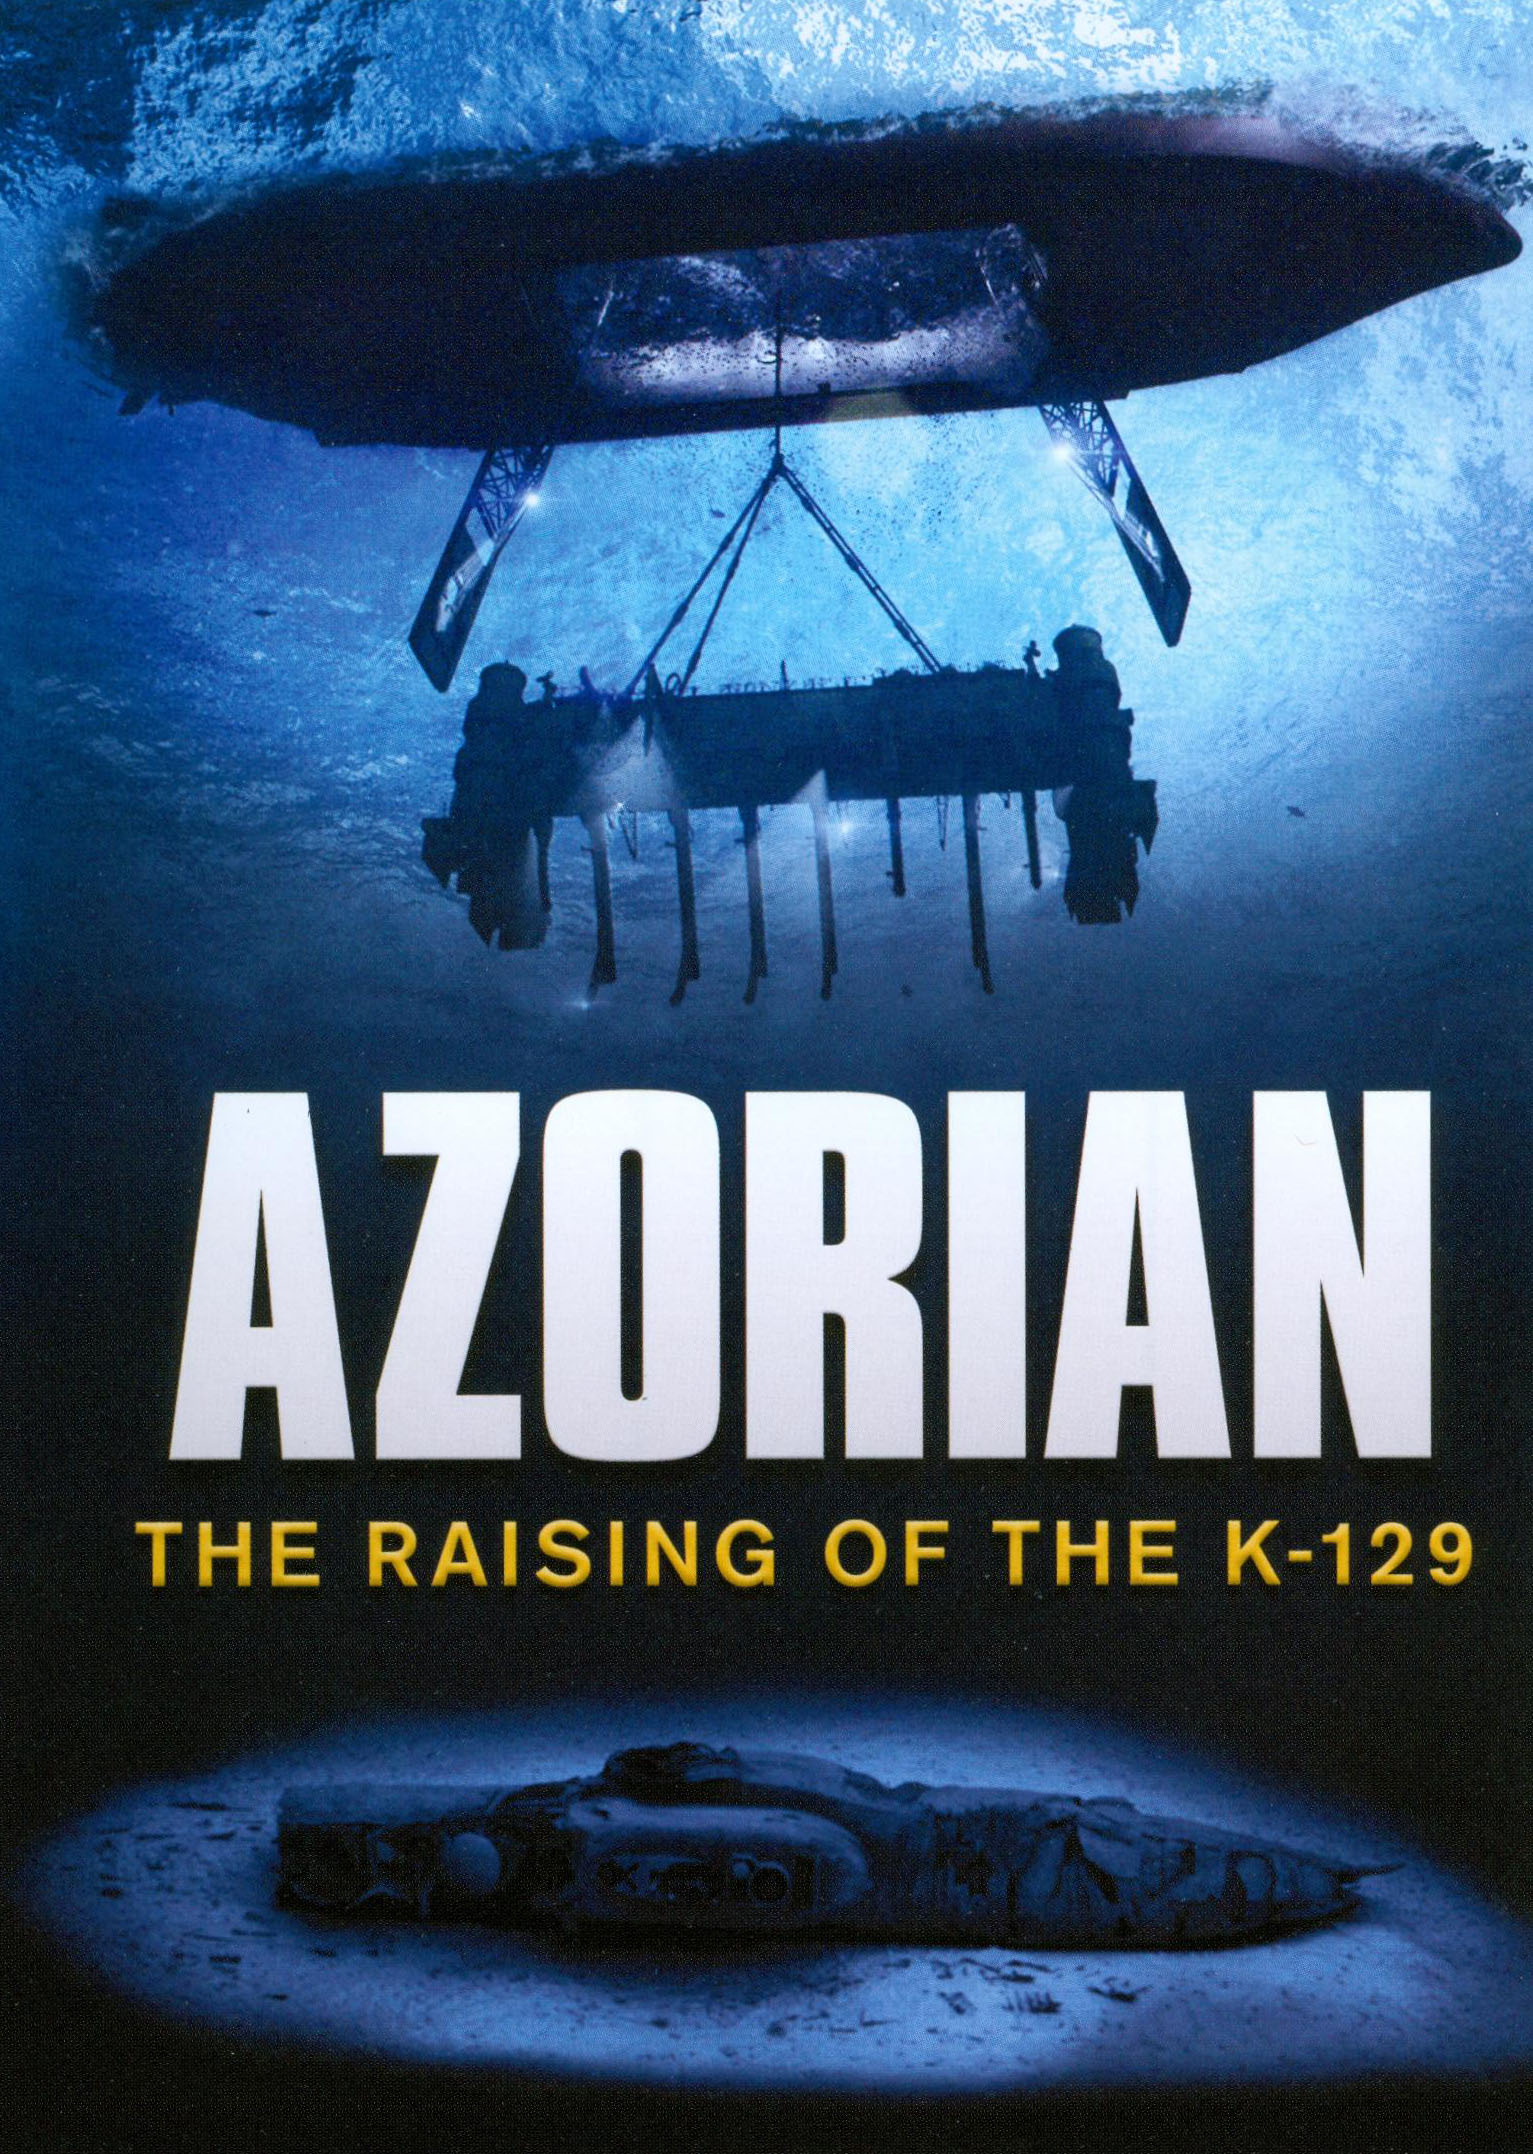 Azorian: The Raising of the K-129 [DVD] [2009]